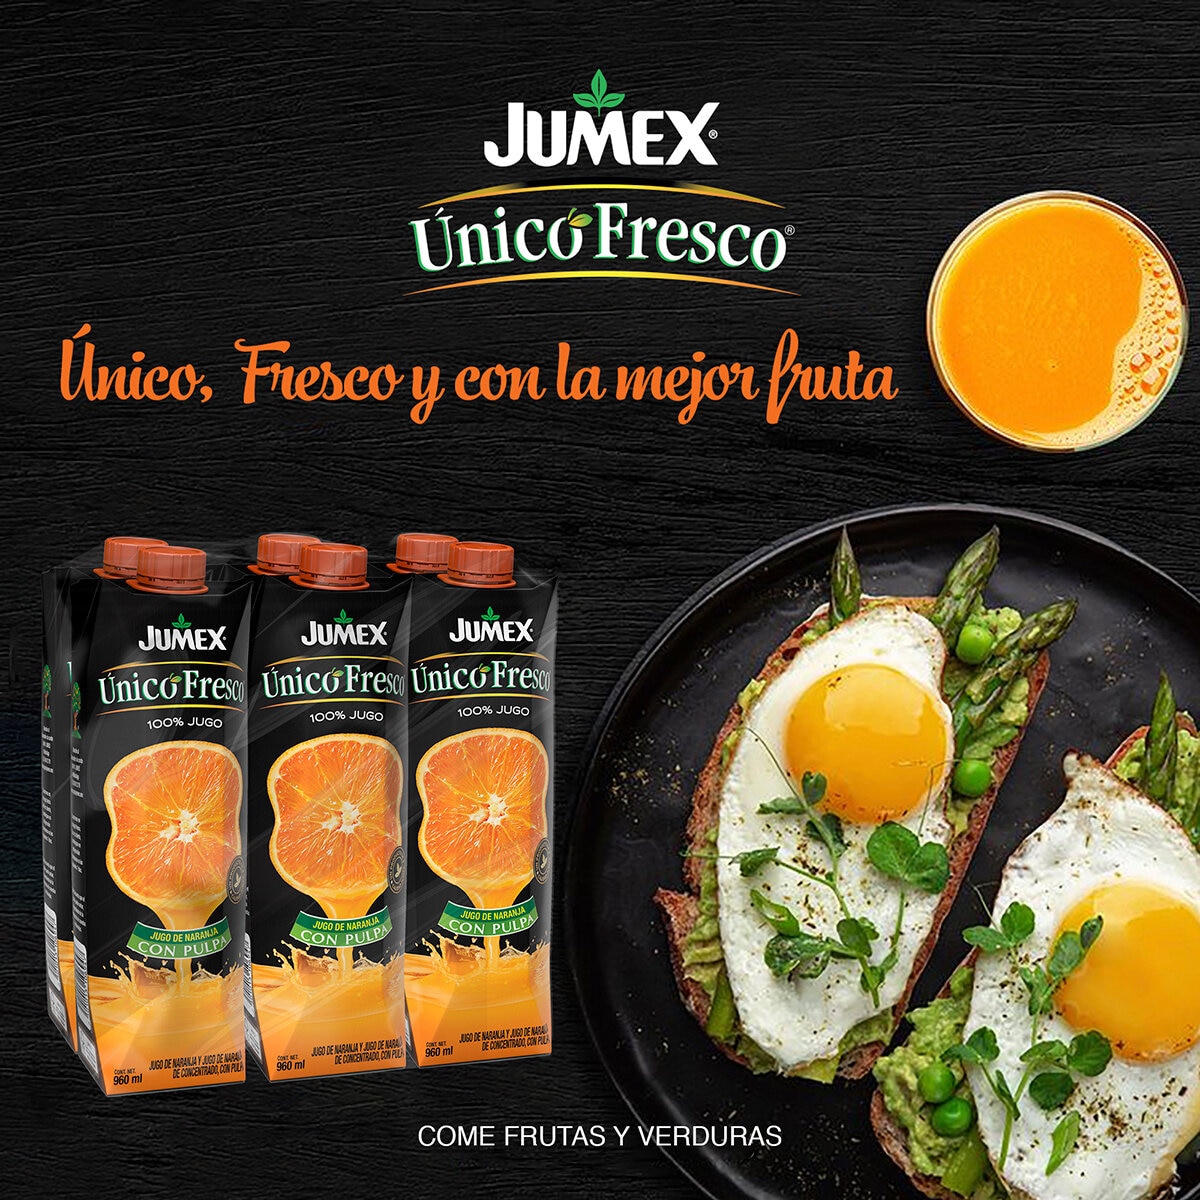 Jumex Único Fresco Jugo de Naranja 6 pzas de 960 ml